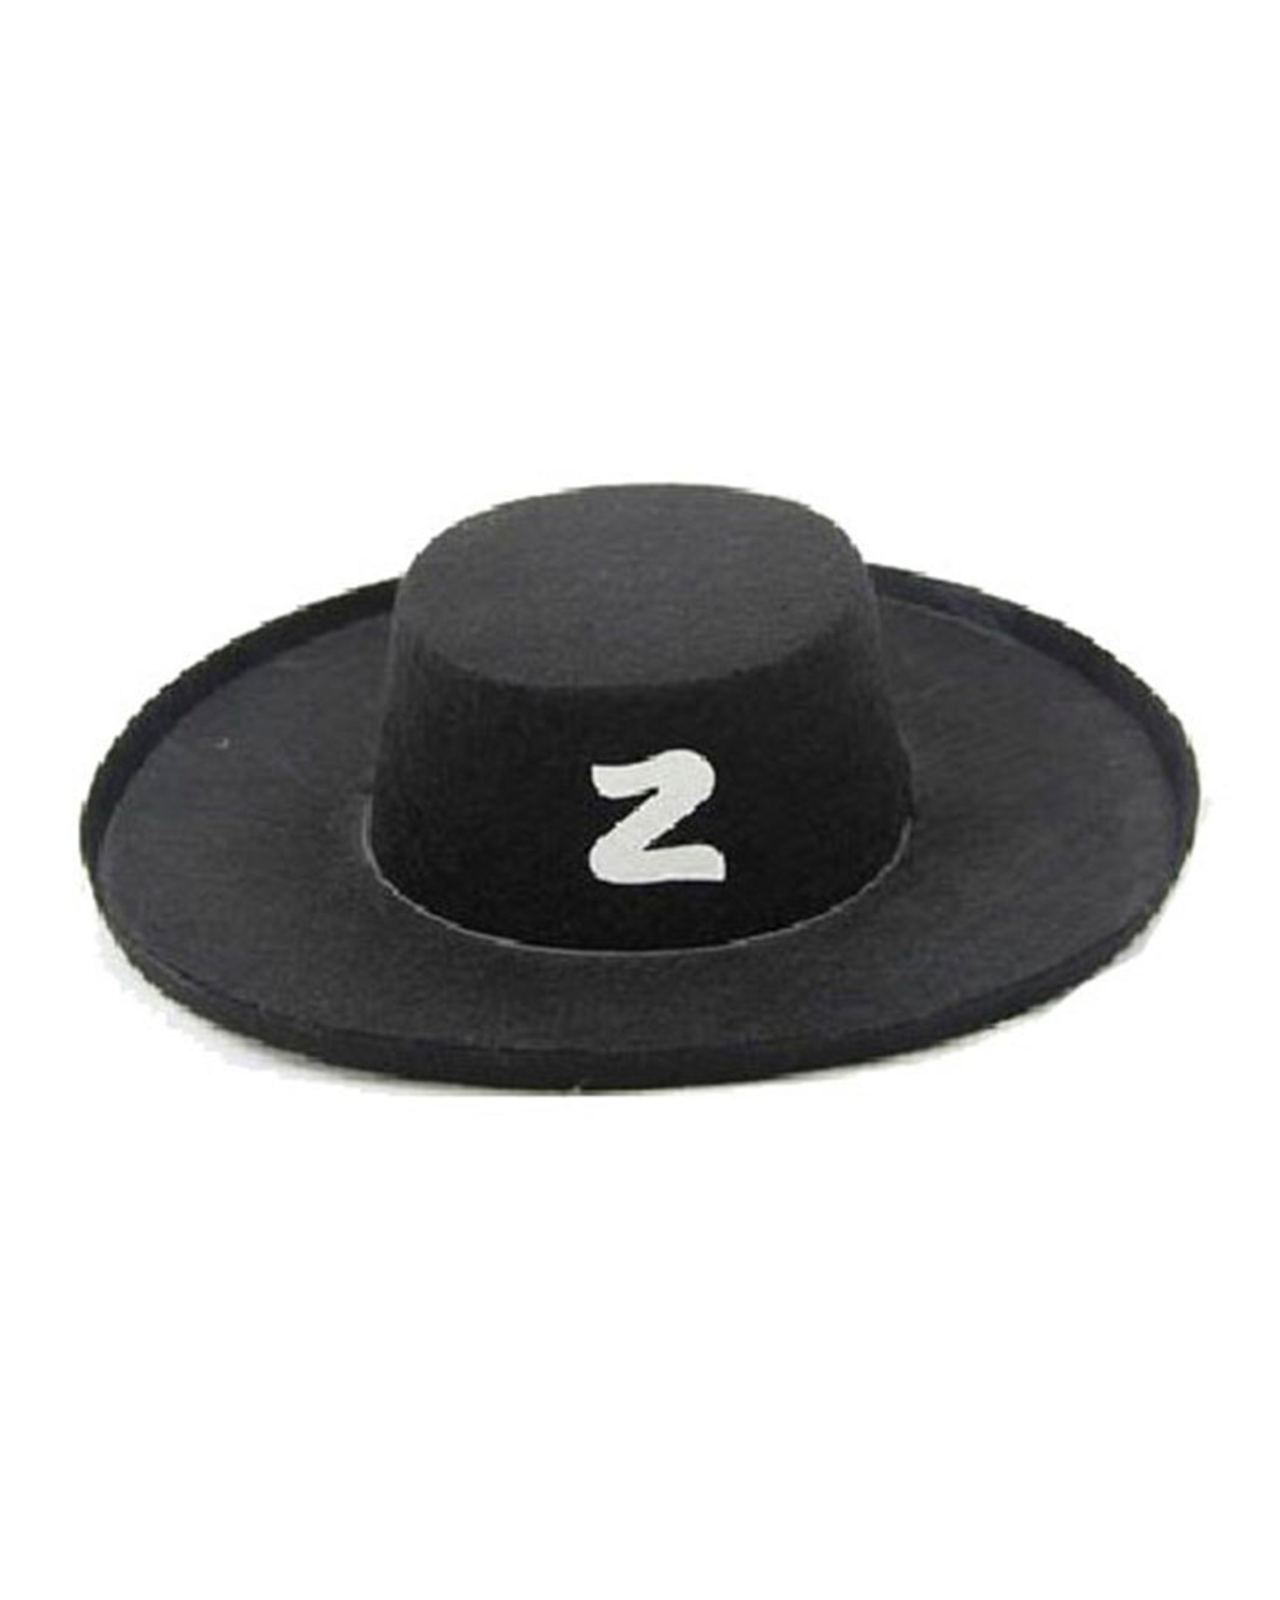 Black Felt Zorro Hat